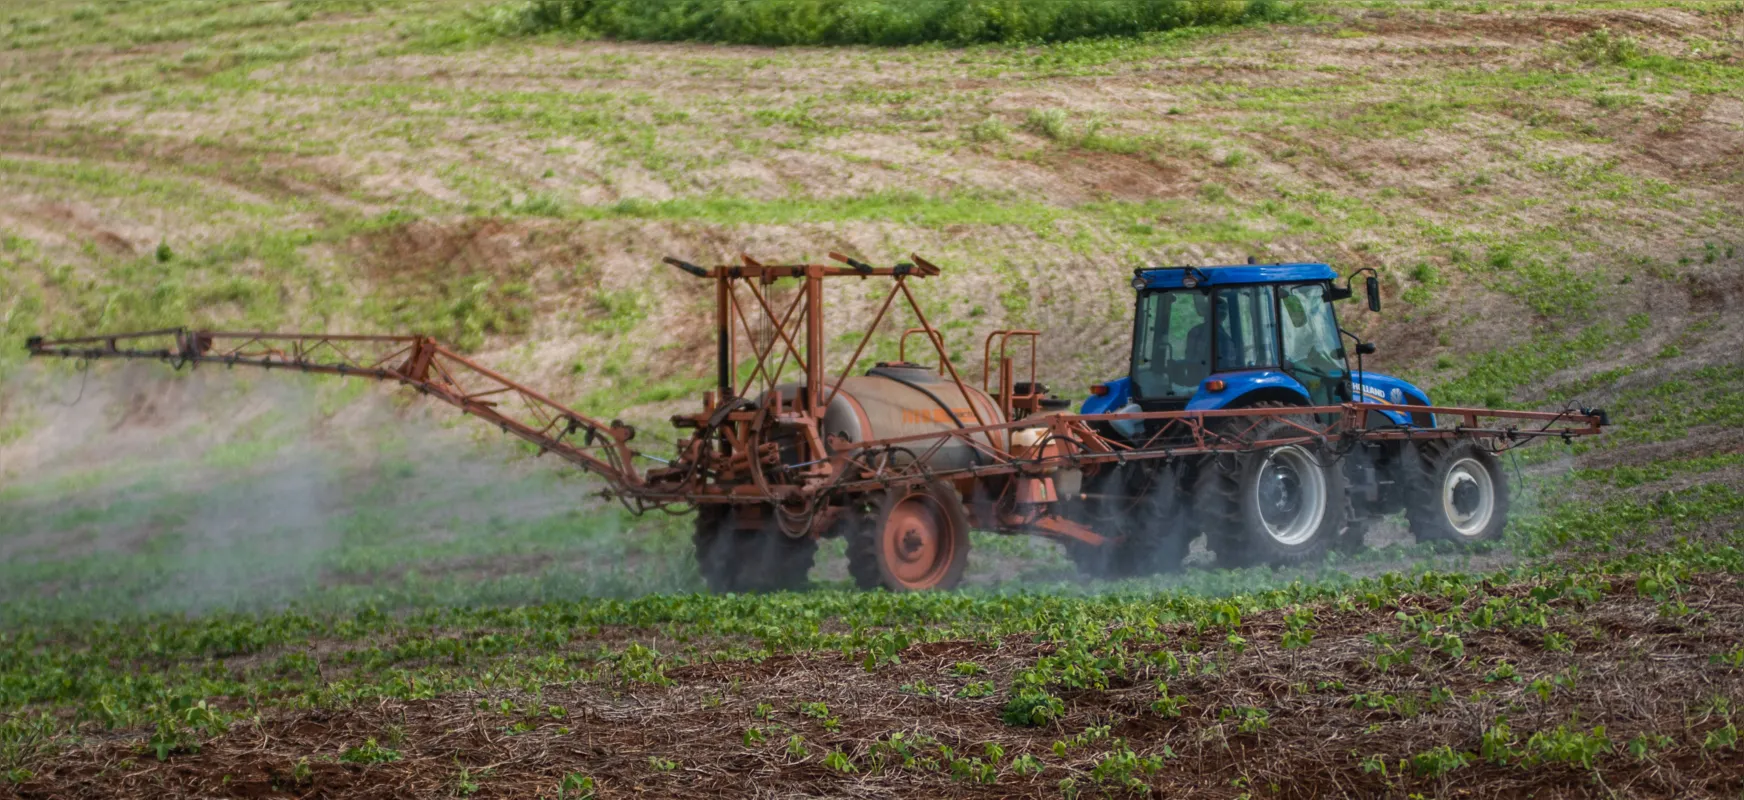 Utilização dos defensivos agrícolas nas lavouras enfrenta longo debate entre ambientalistas, pesquisadores e ruralistas